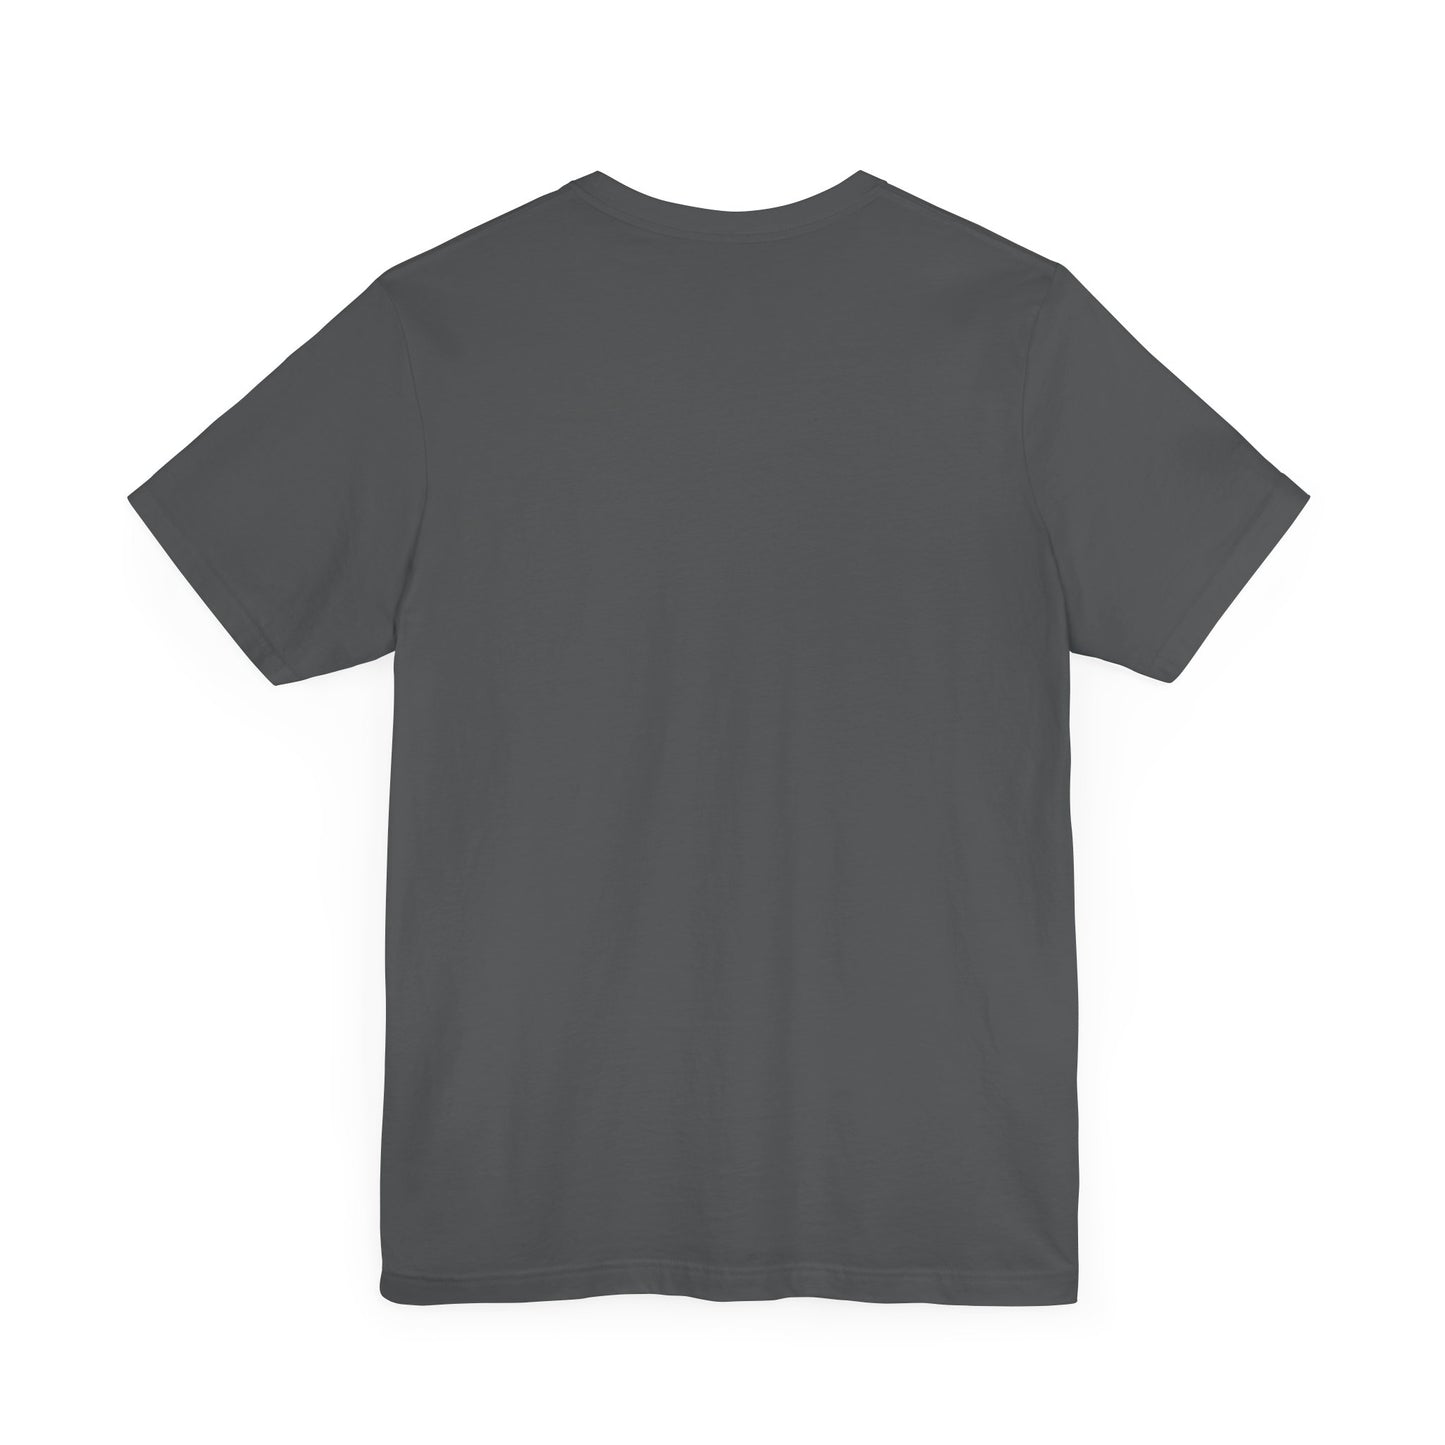 Chernihiv T-shirt Unisex Jersey Short Sleeve Tee